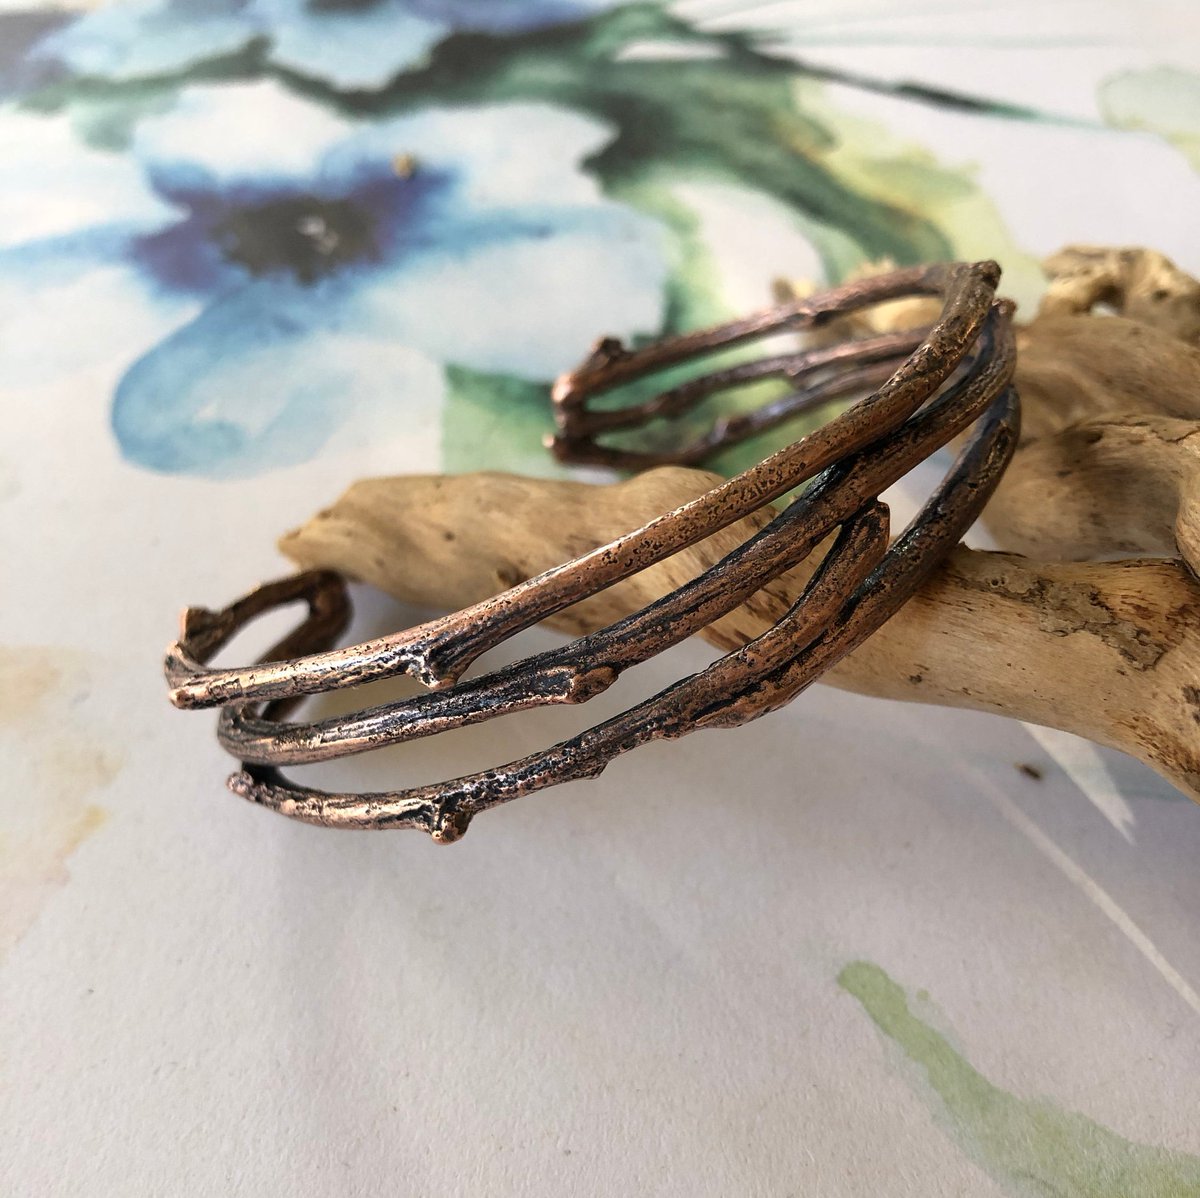 Copper Woodland Cuff Bracelet  Nature Inspired Rustic Twig Bracelet  Unisex Copper Cuff Bracelet tuppu.net/6bfbad73 #Etsy #CapitalCityCrafts #giftideas #artisanjewelry #handmadeinUSA #Capitalcityrafts